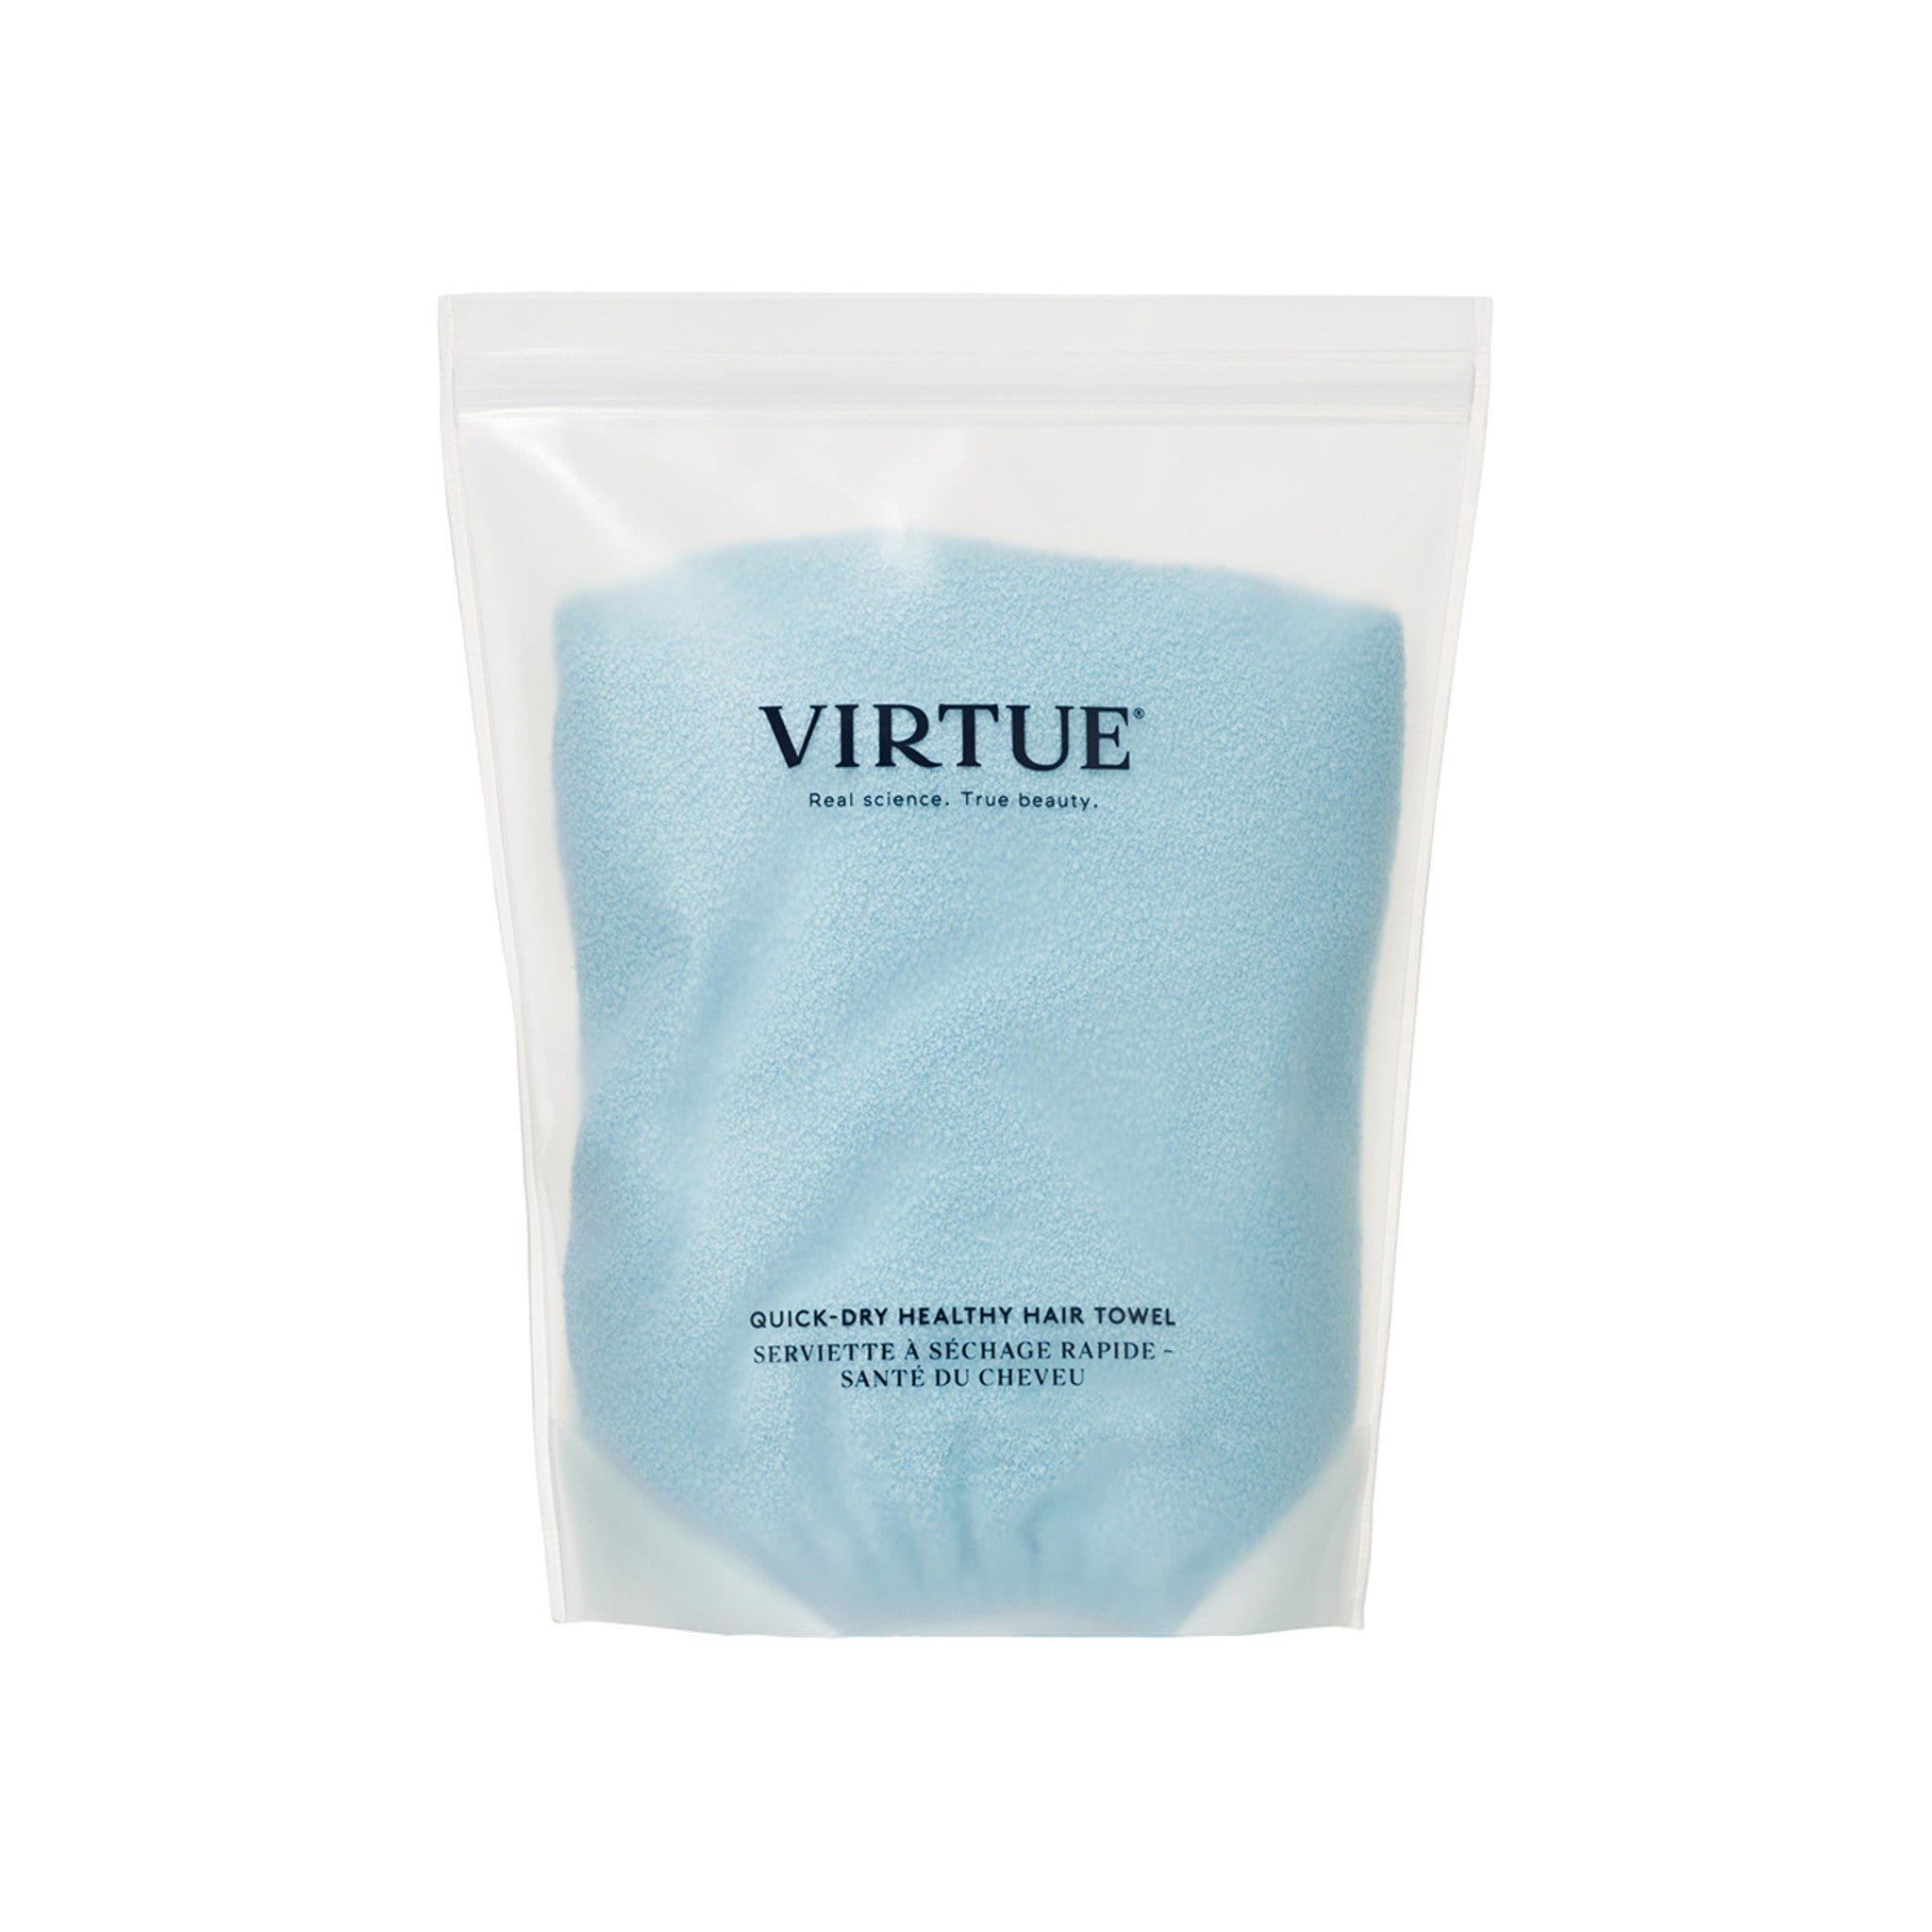 Virtue Quick-Dry Healthy Hair Towel main image.